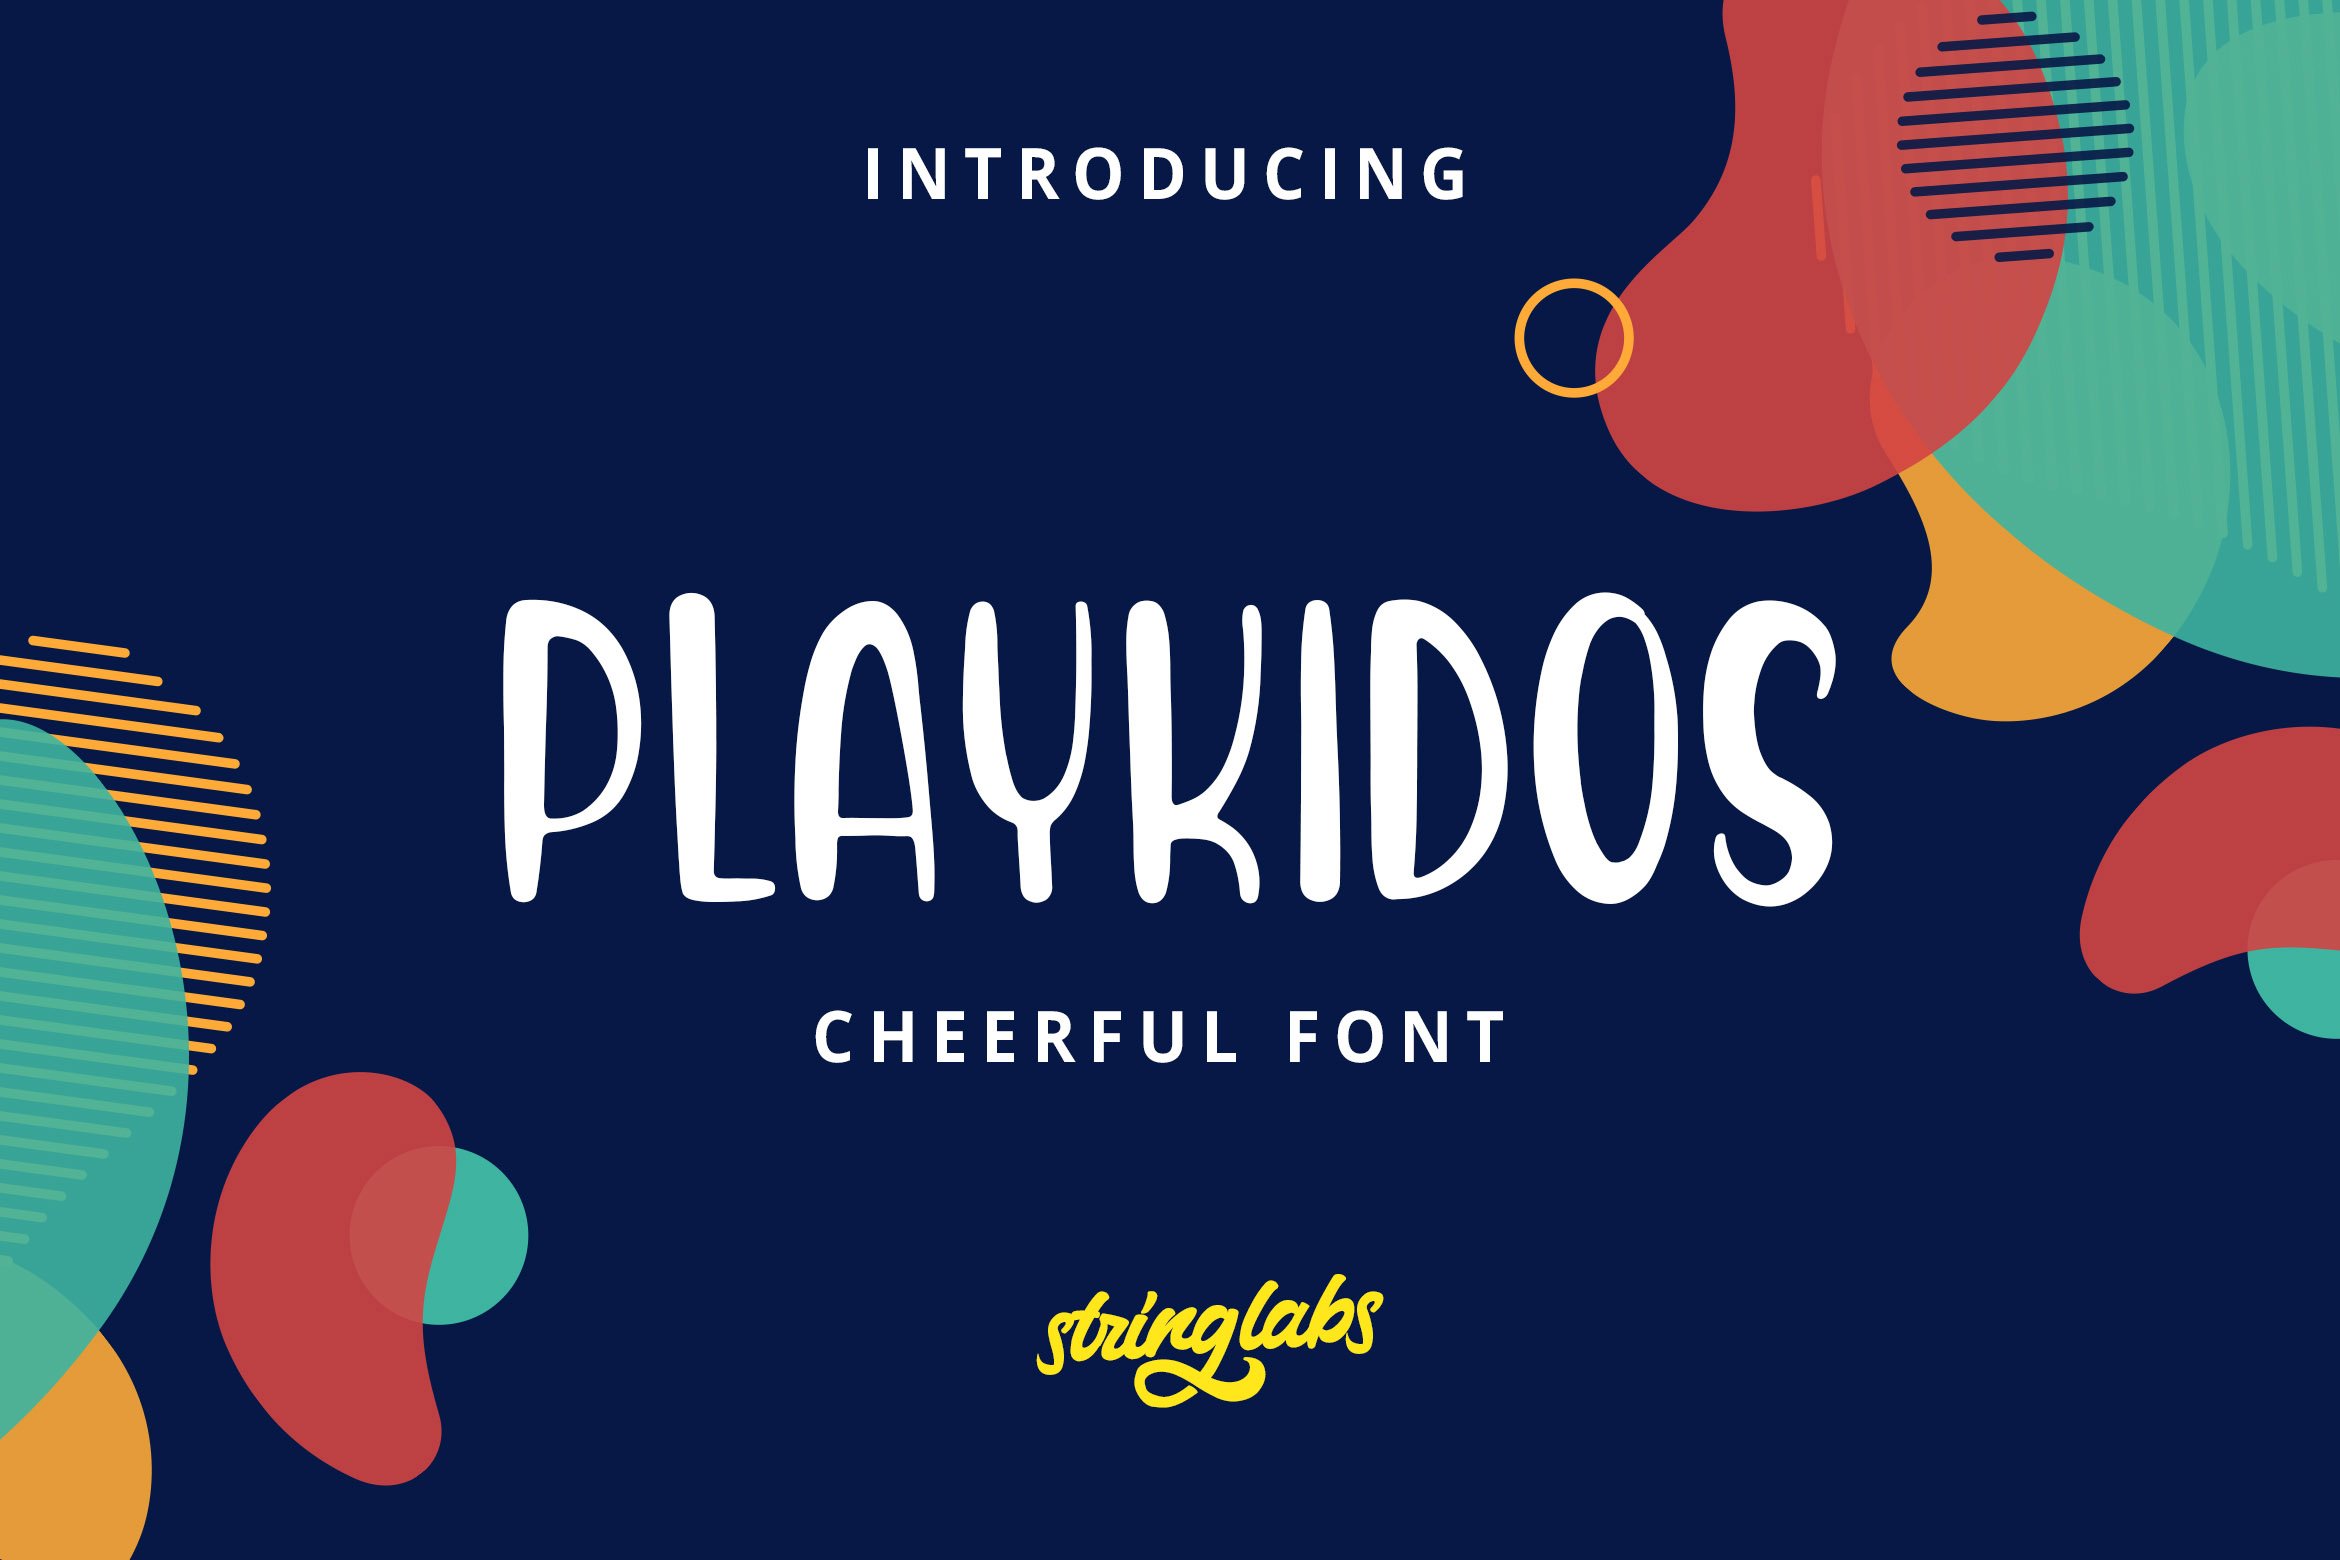 Playkidos - Playful Font cover image.